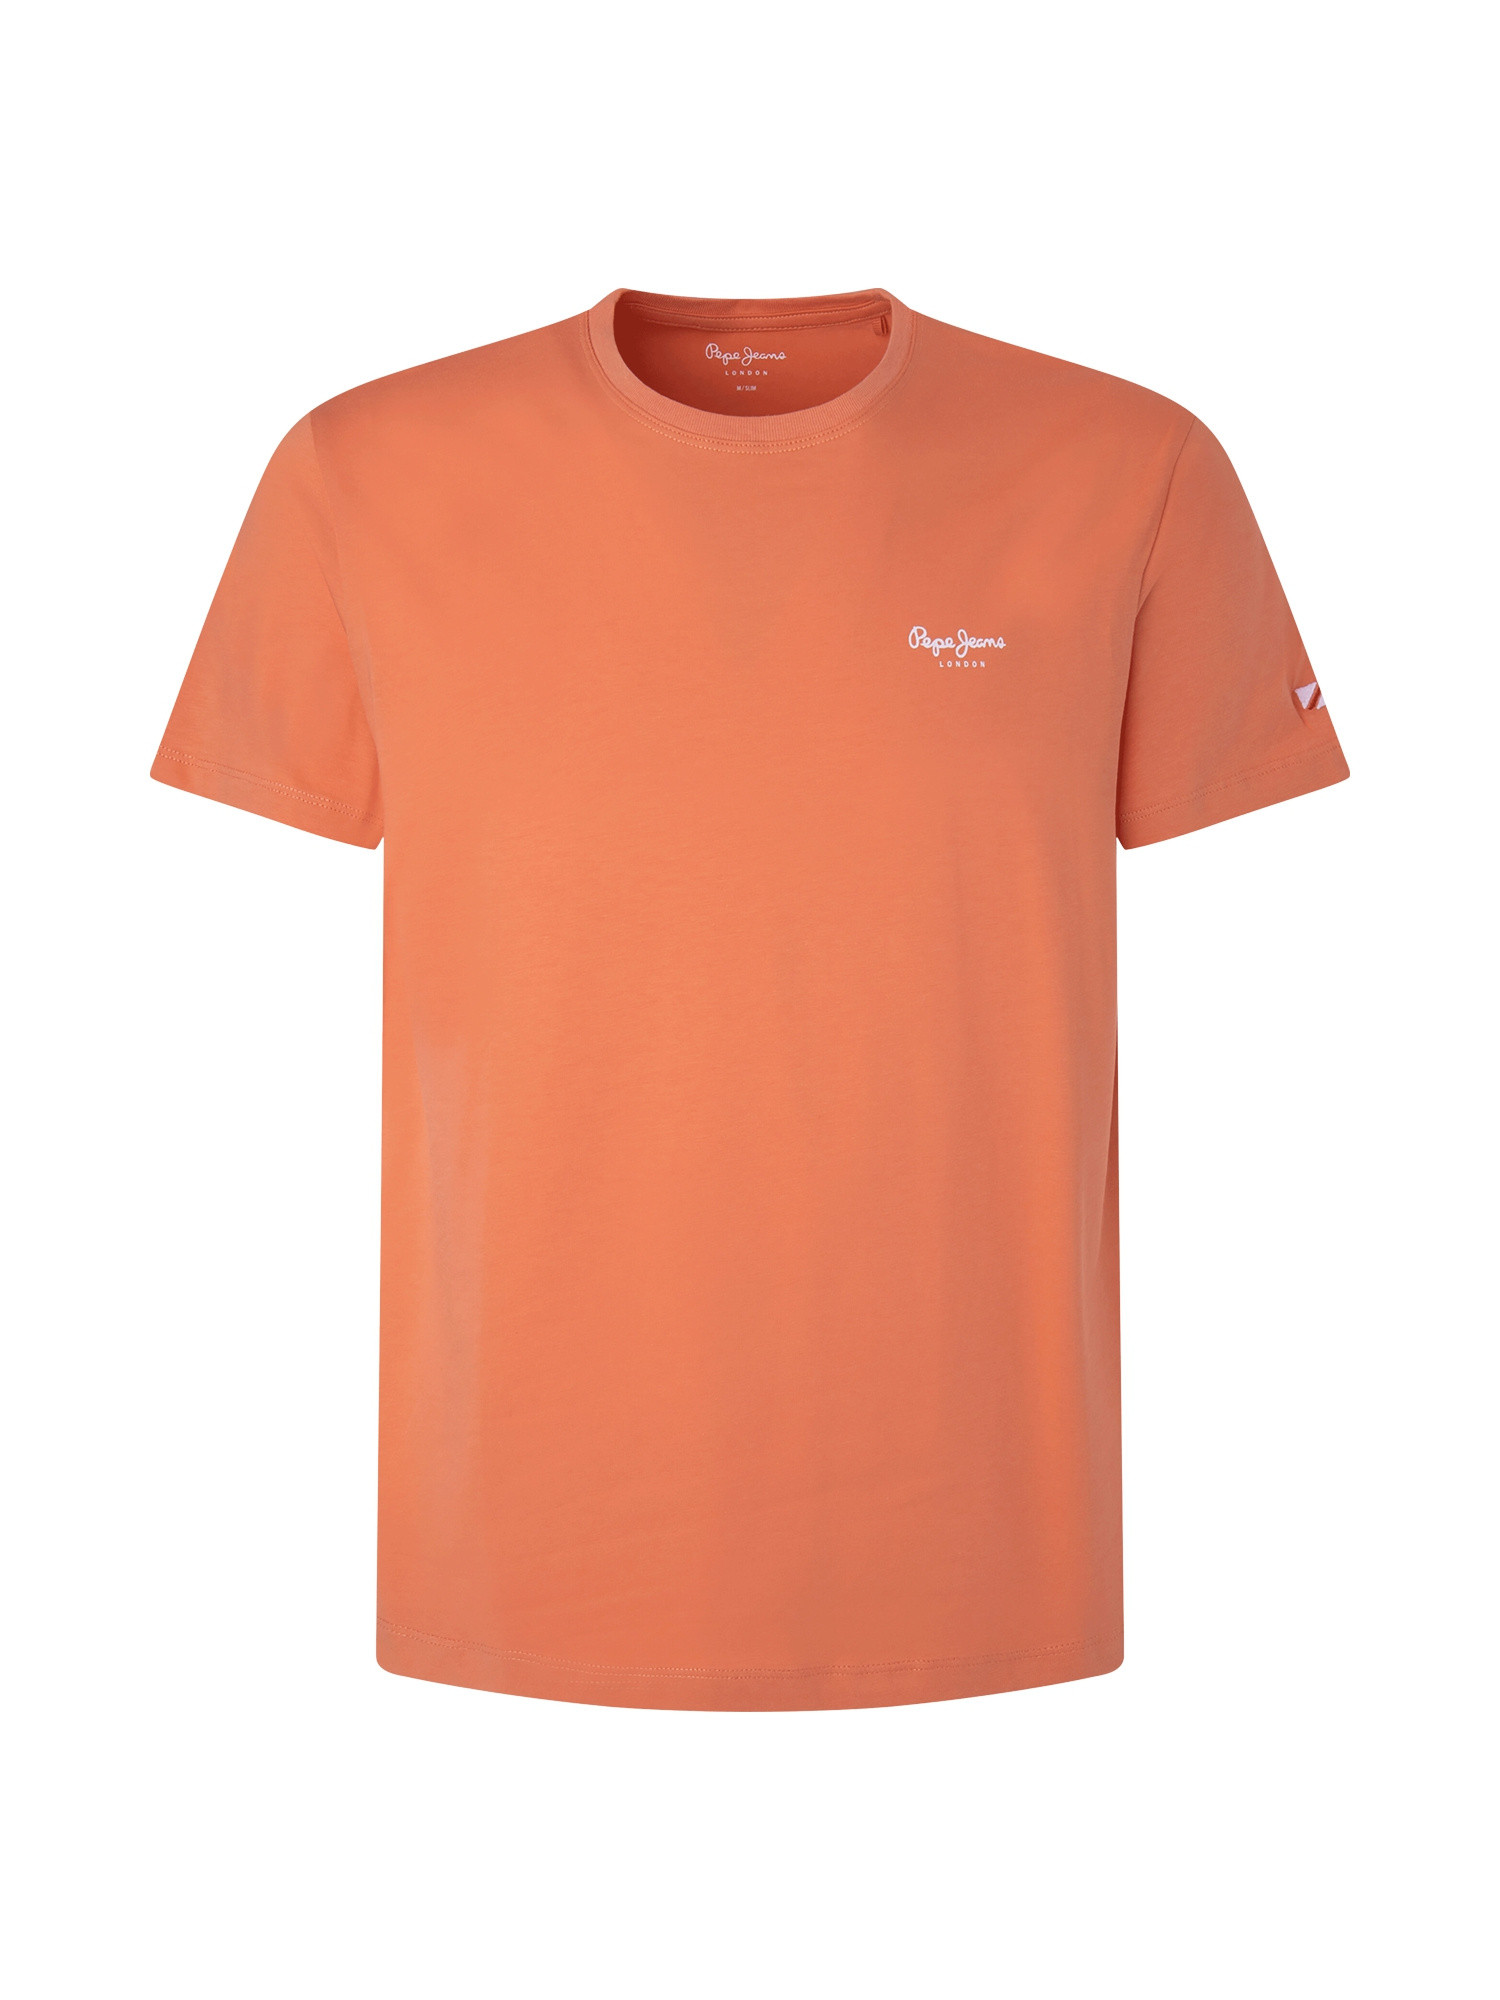 Pepe Jeans - T-shirt con logo ricamato in cotone, Arancione, large image number 0